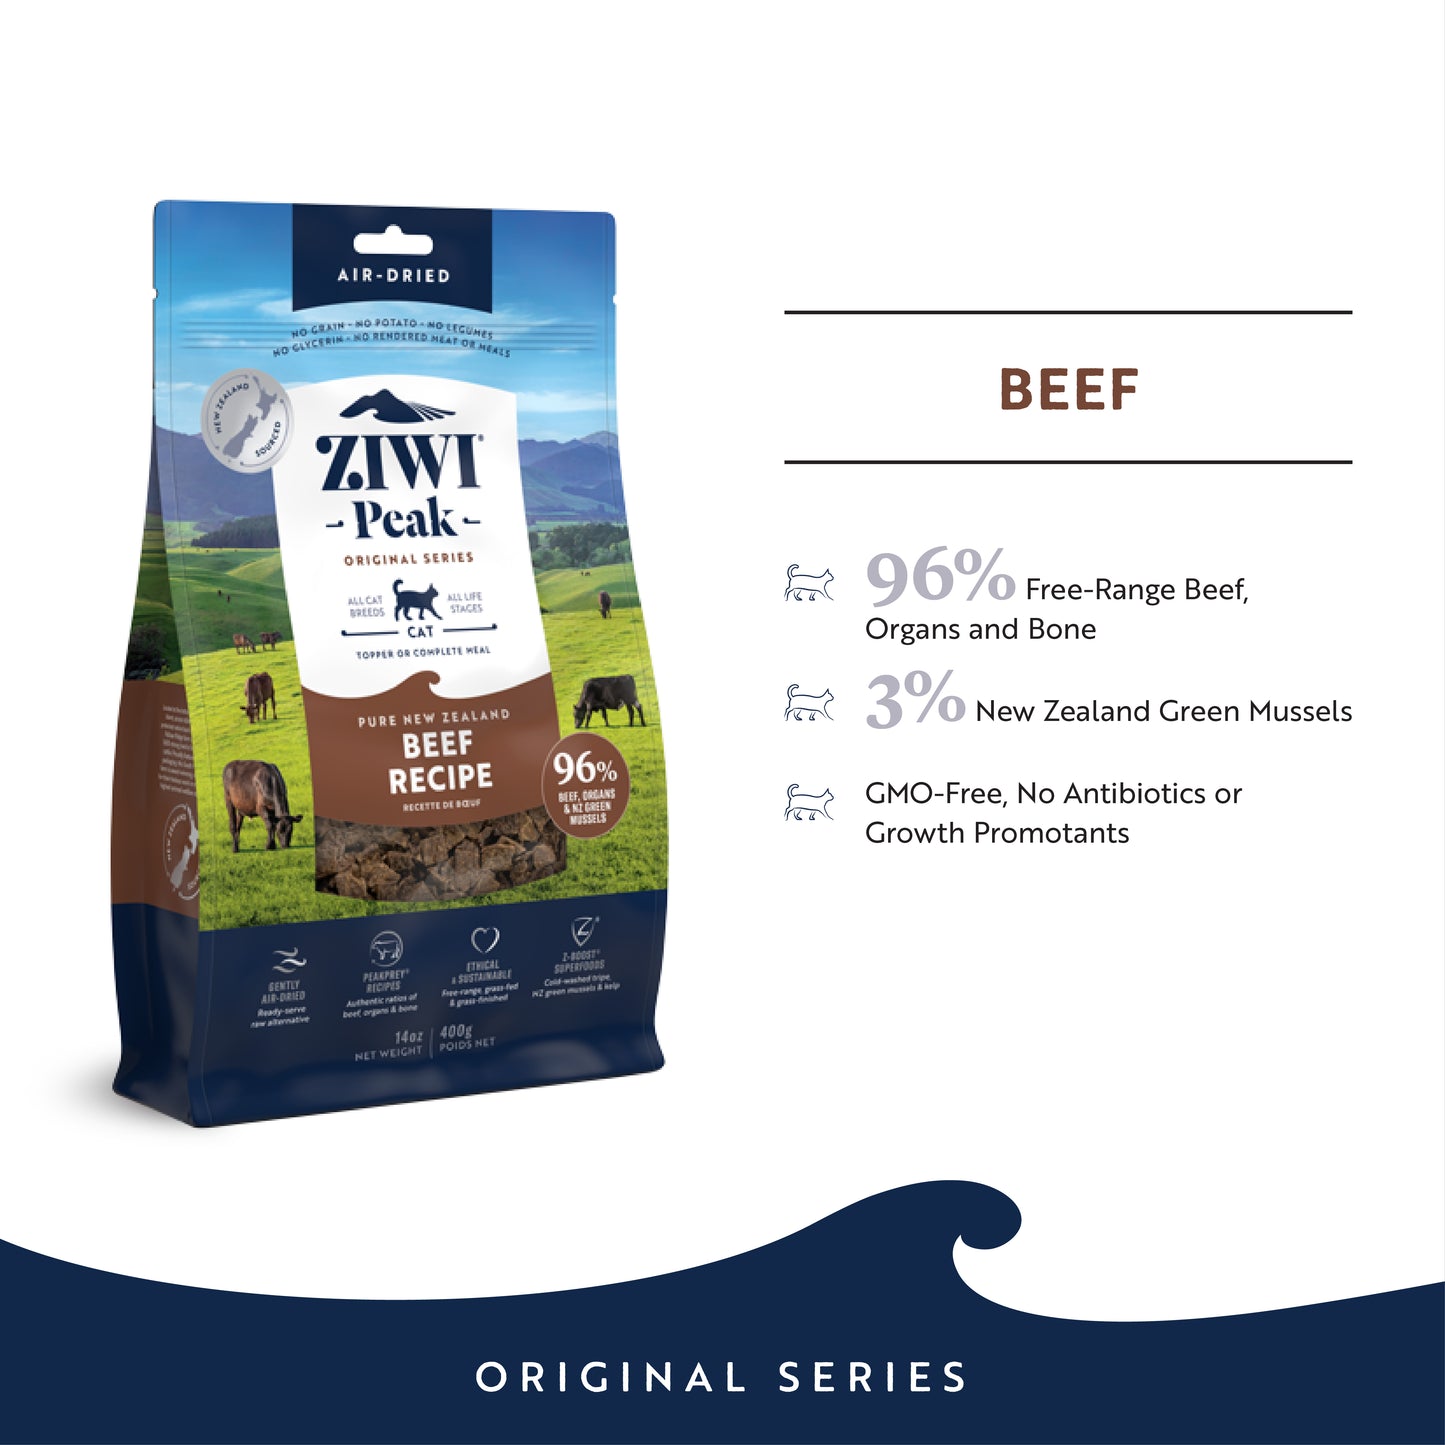 ZIWI Peak Air-Dried Beef Cat Food 400g